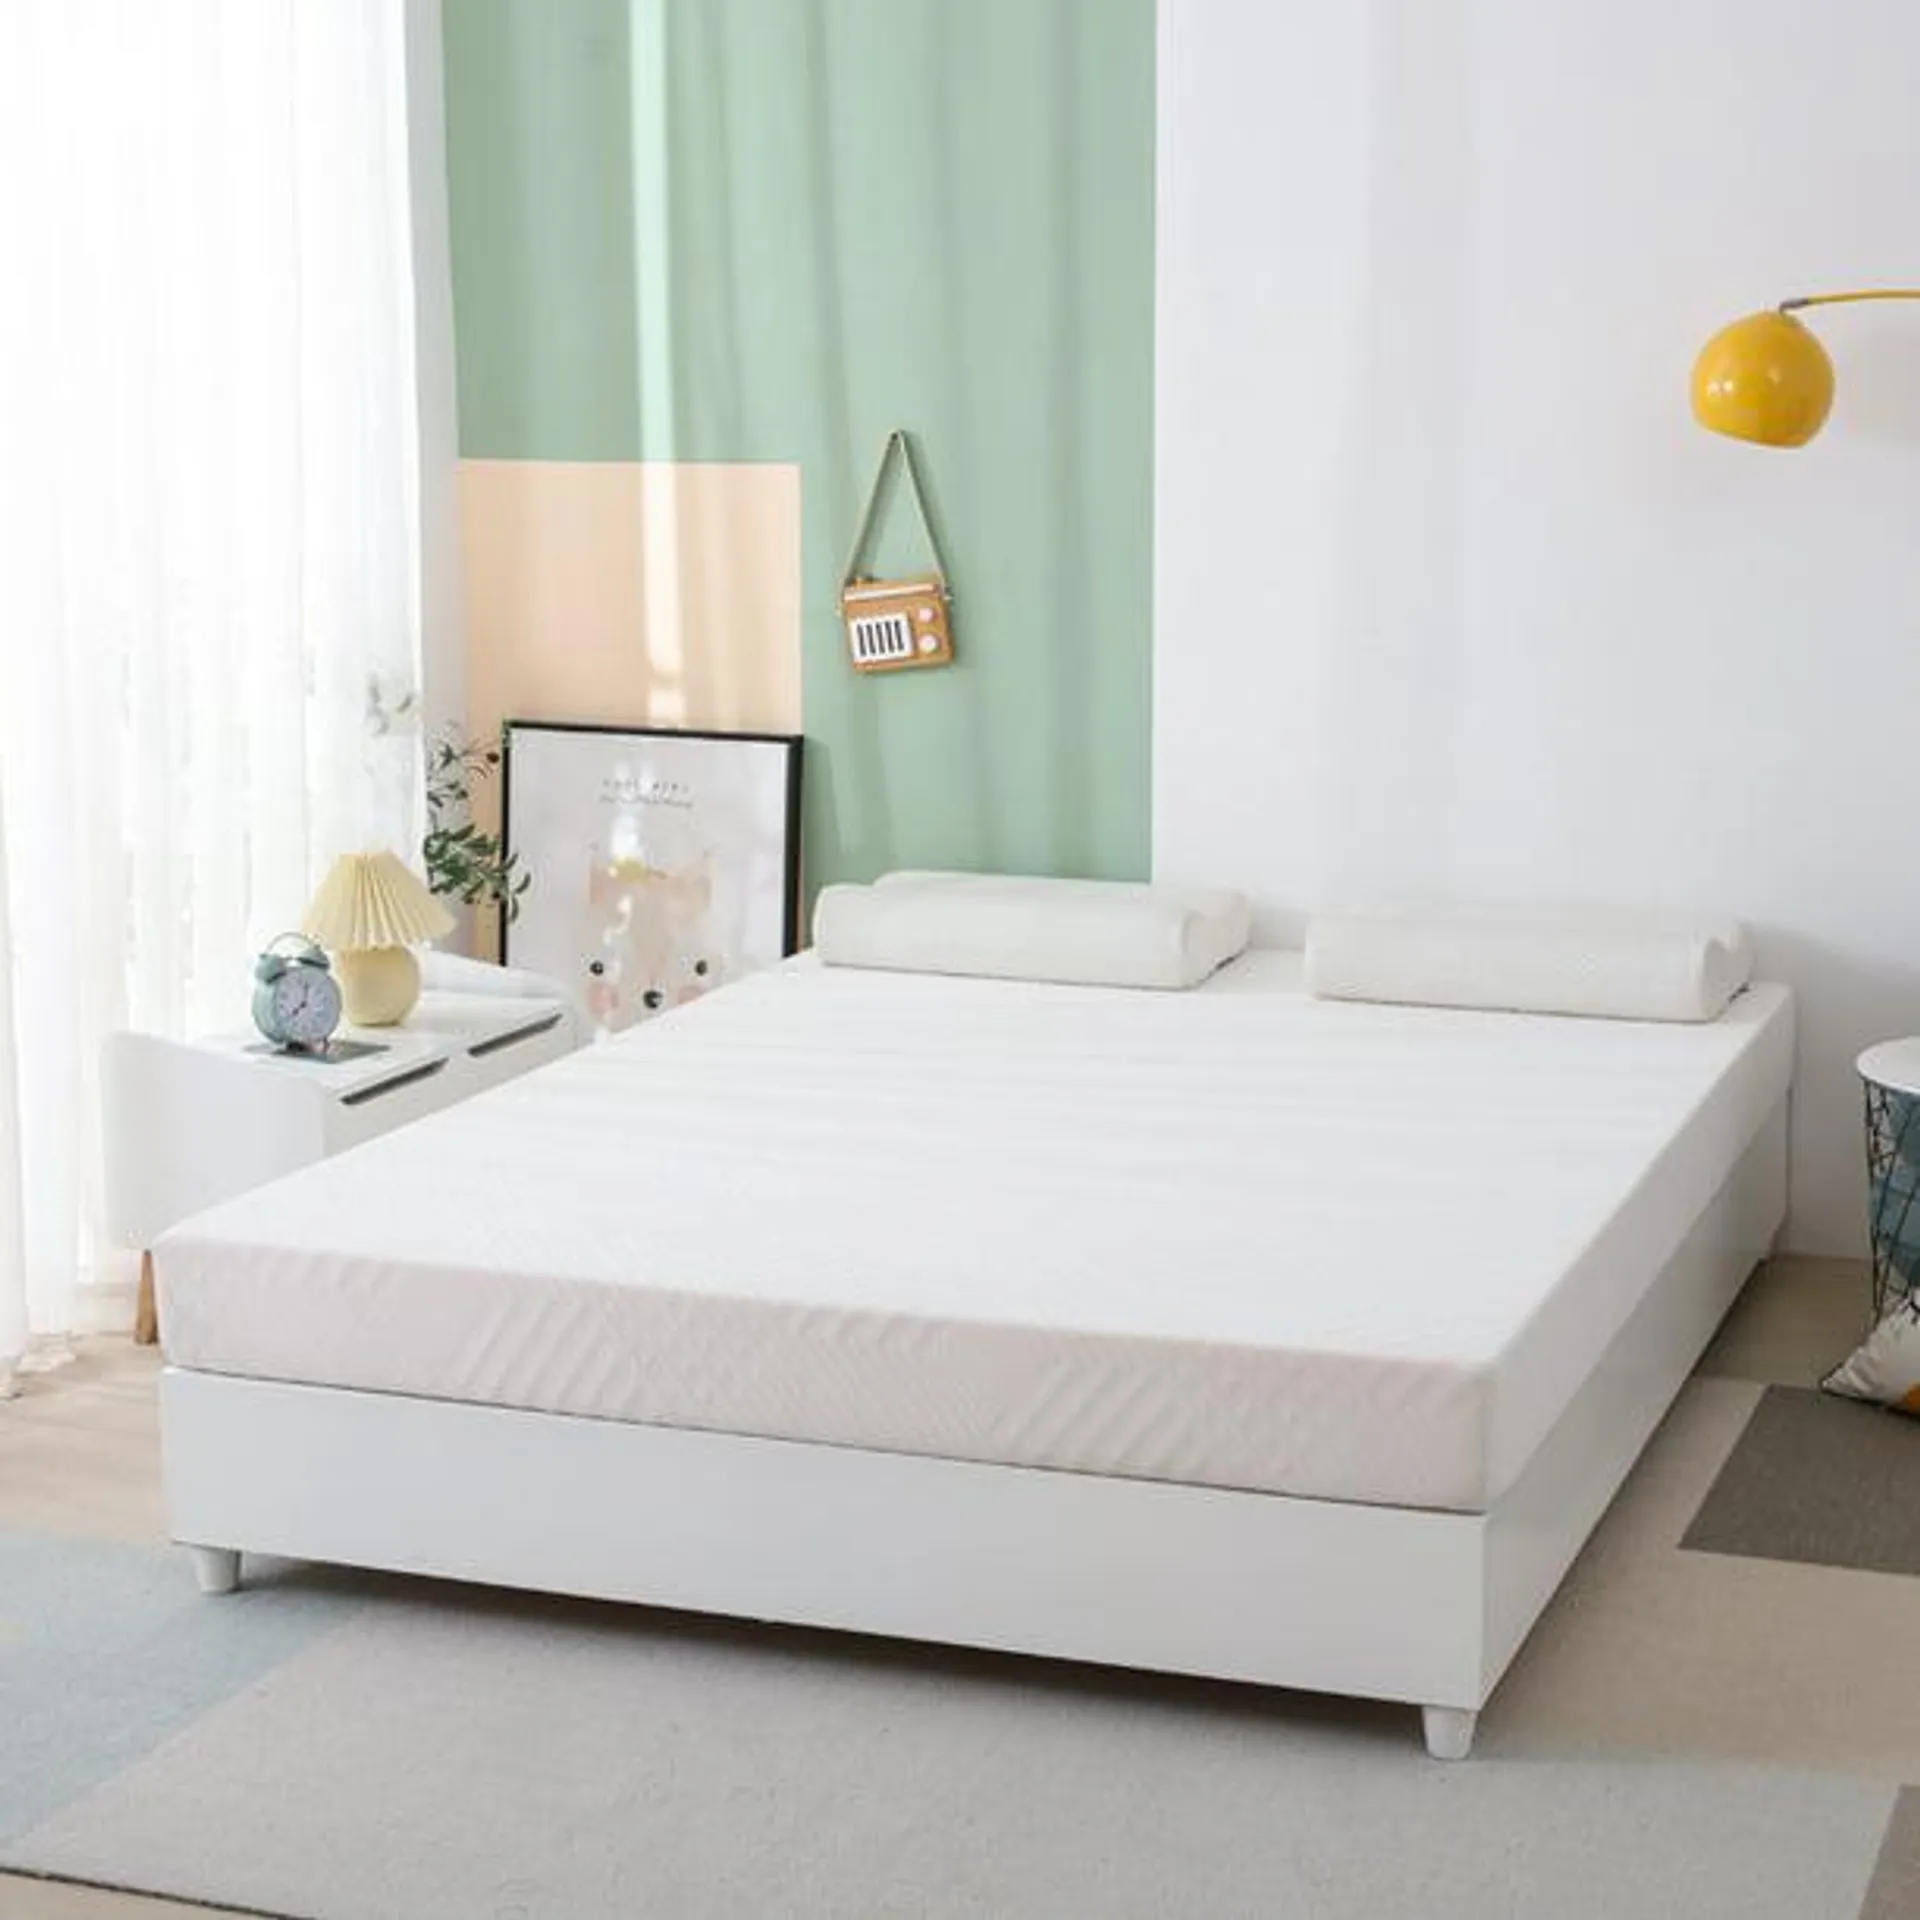 Twin Size Mattress, 6 inch Bed in a Box, Memory Foam Mattress, White